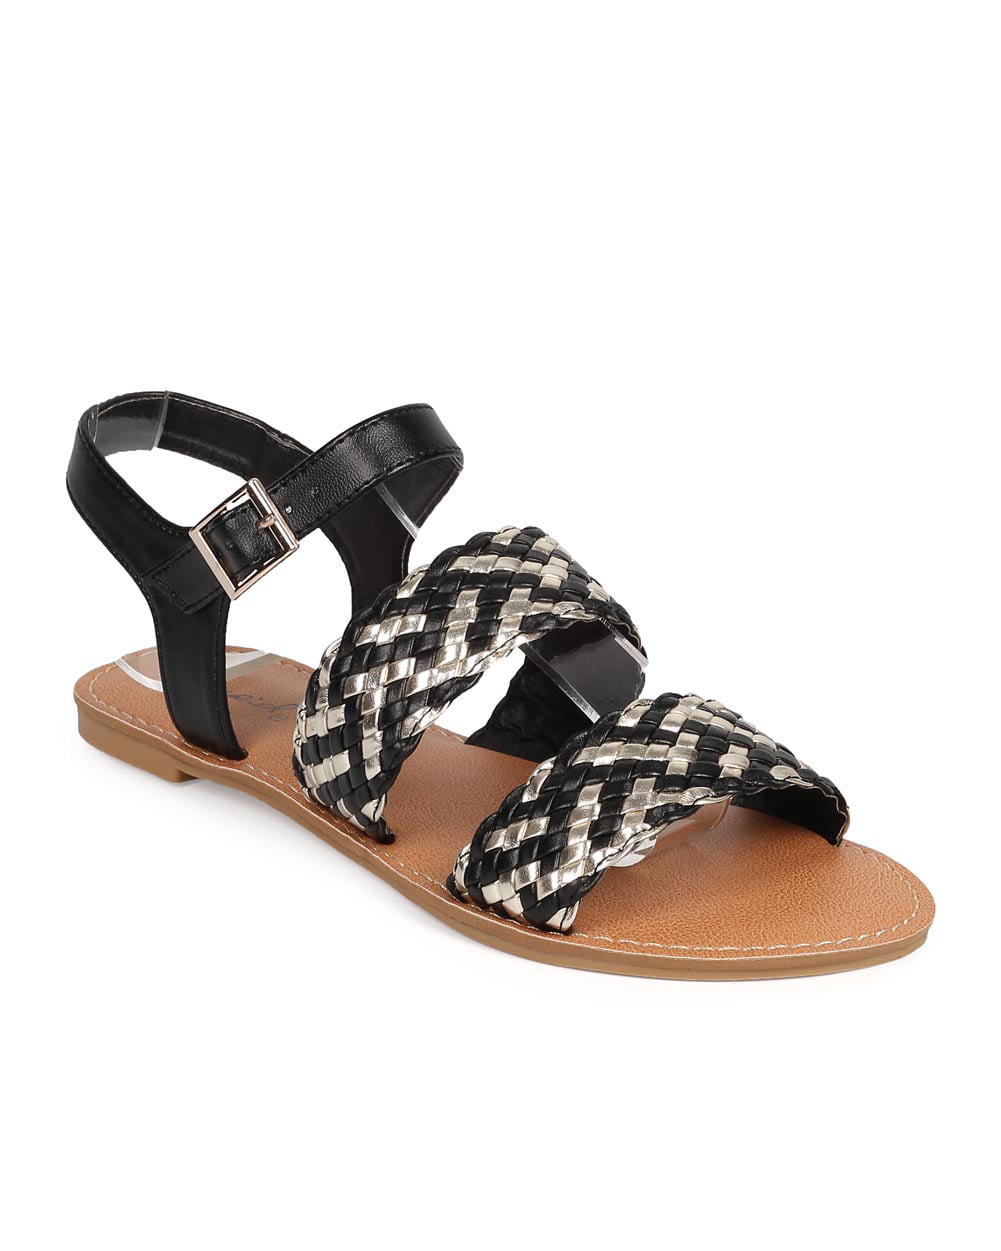 Qupid - Qupid DI74 Women Leatherette Open Toe Woven Ankle Strap Sandal ...